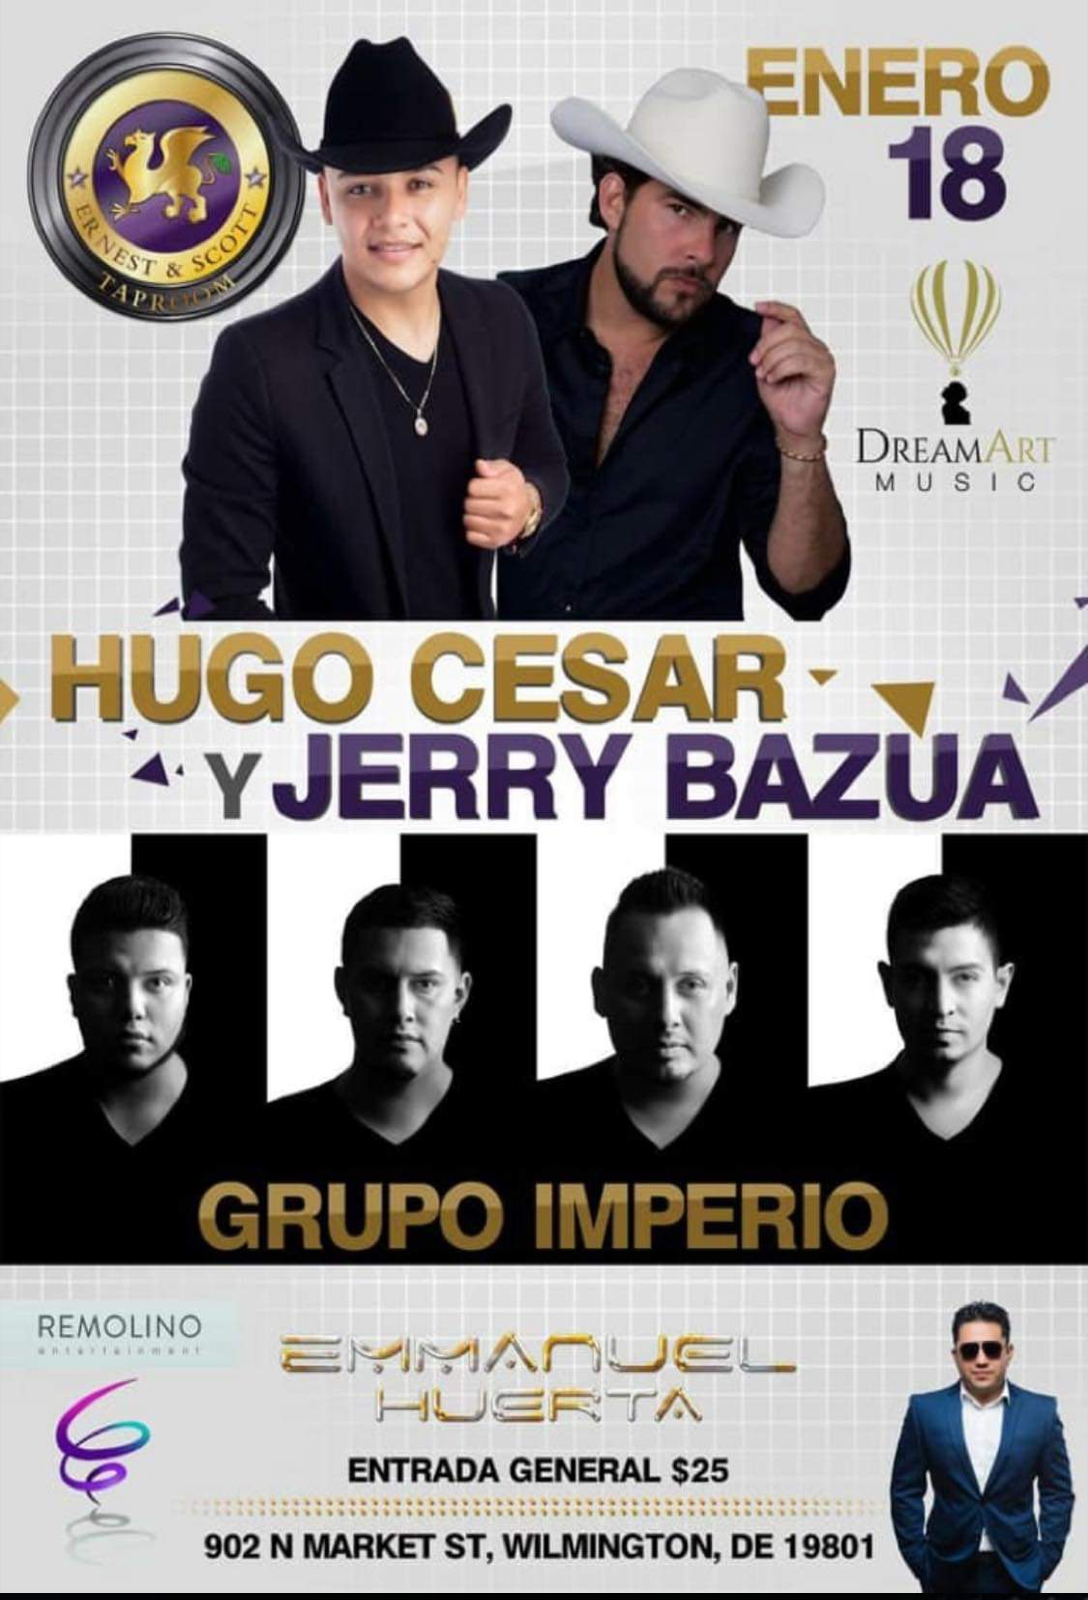 Hugo Cesar y Jerry Bazua con Grupo Imperio